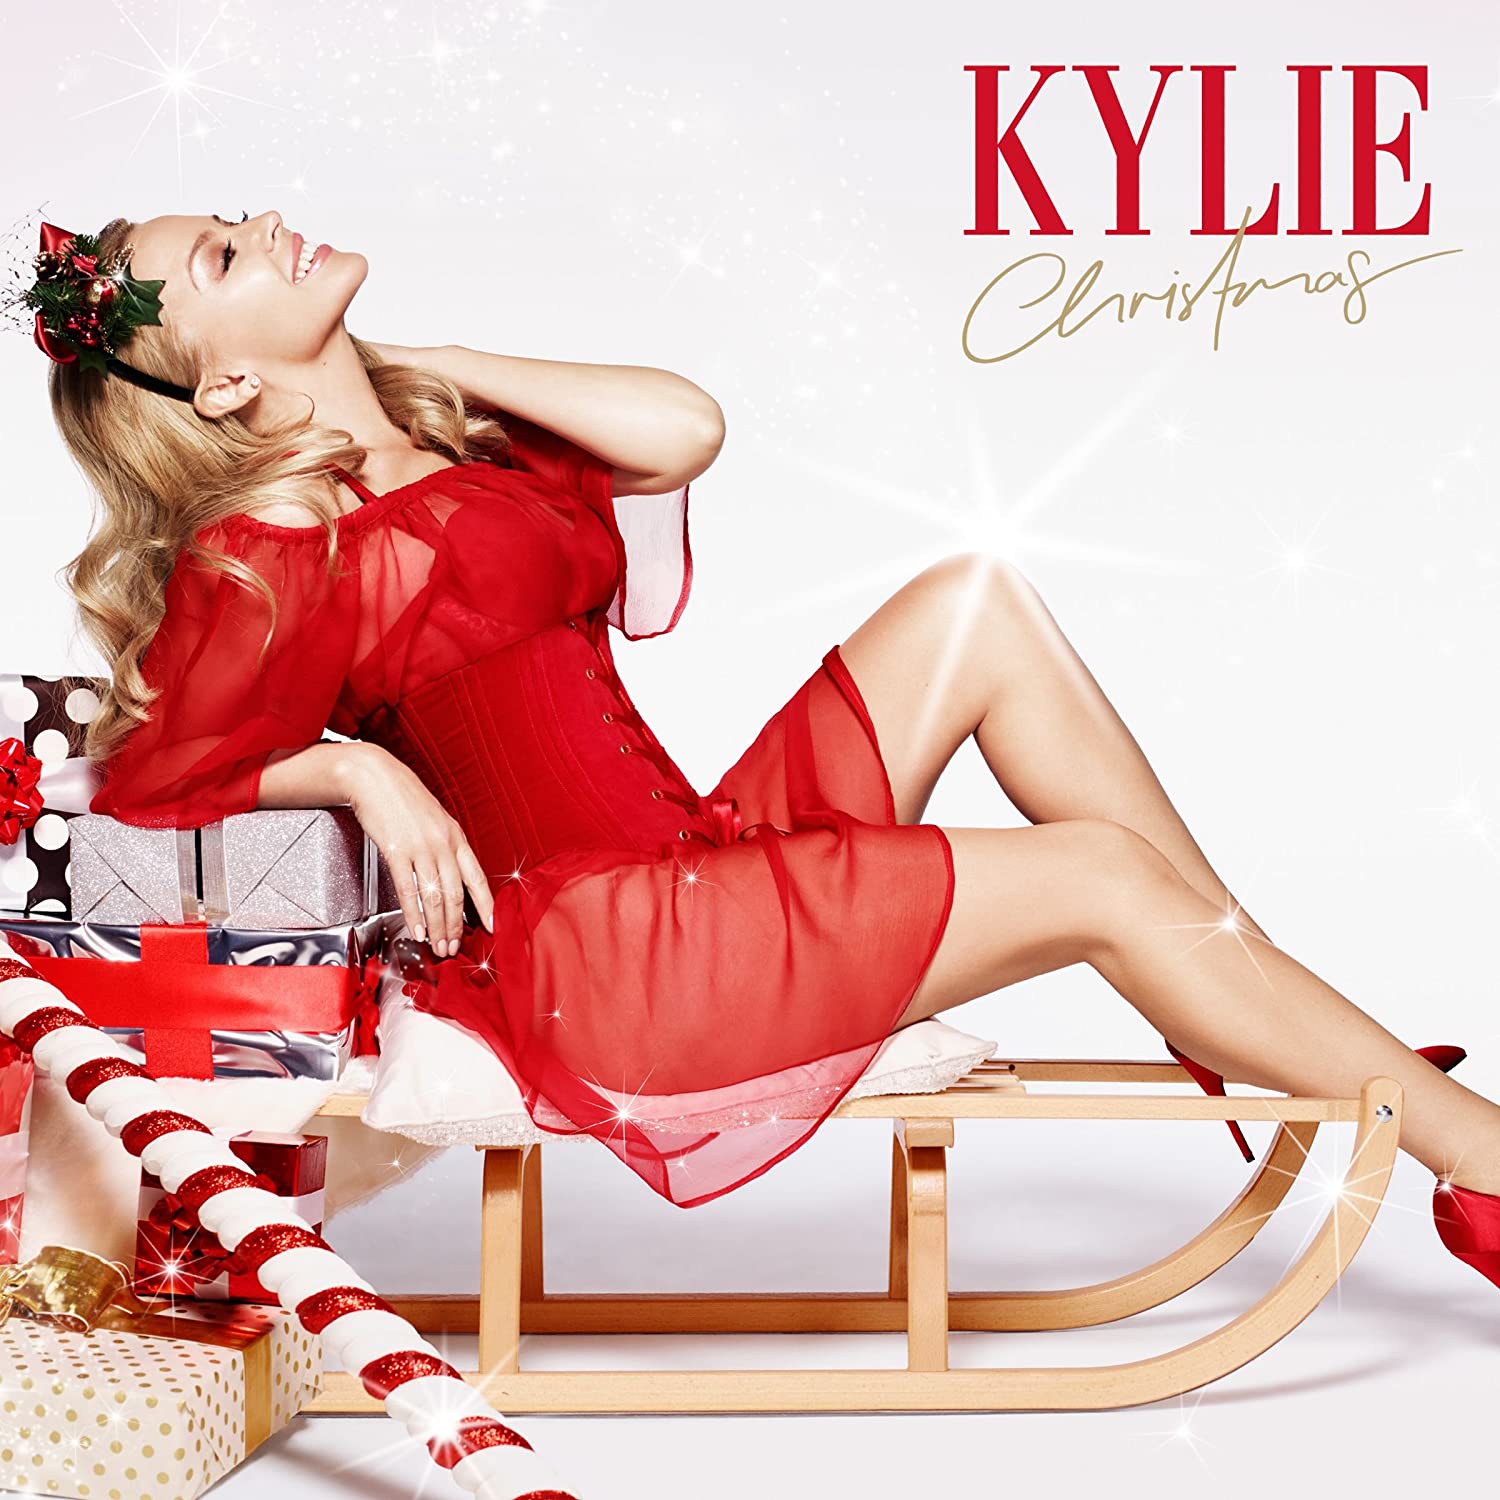 Kylie Minogue "Kylie Christmas" LP